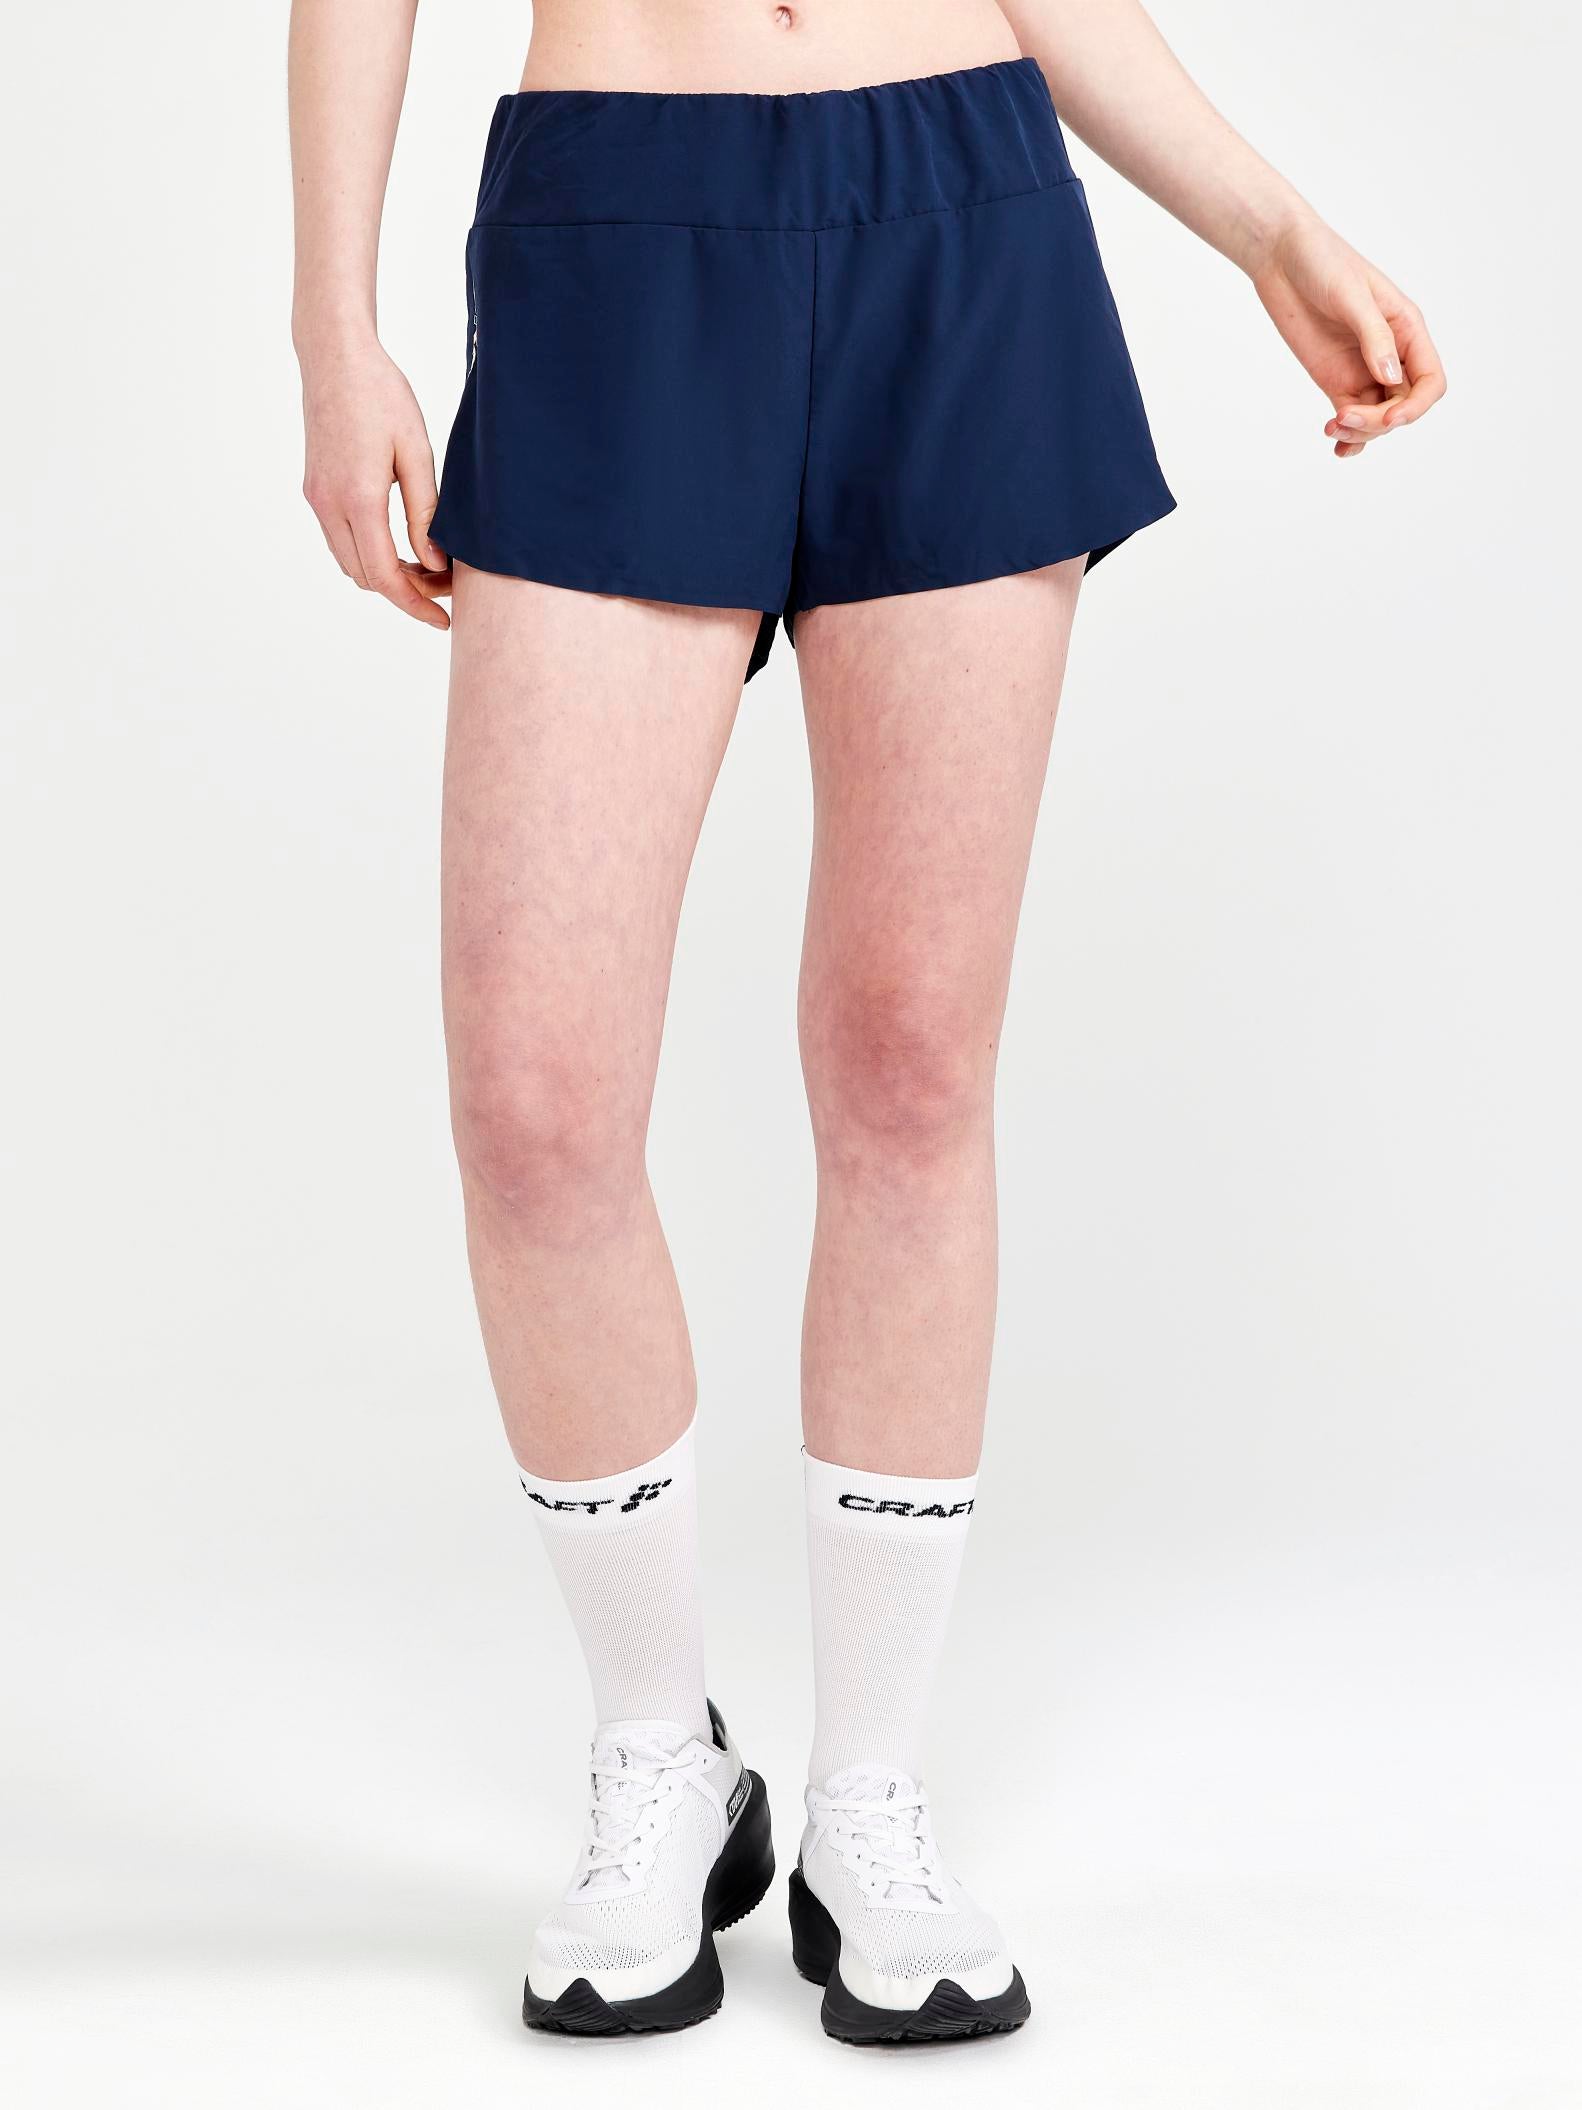 Women's USA Classic Compression Shorts